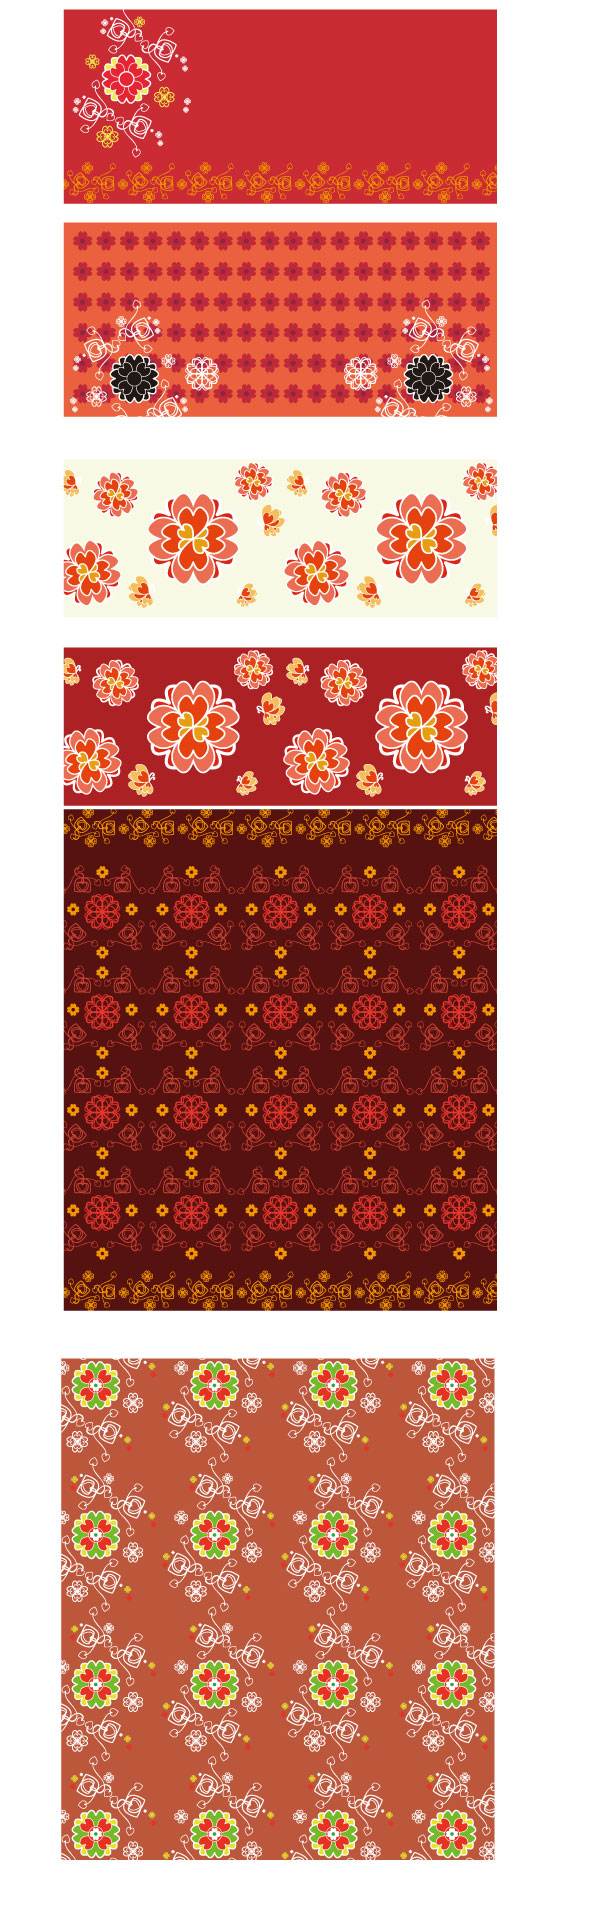 Flowers decorative pattern background design vector